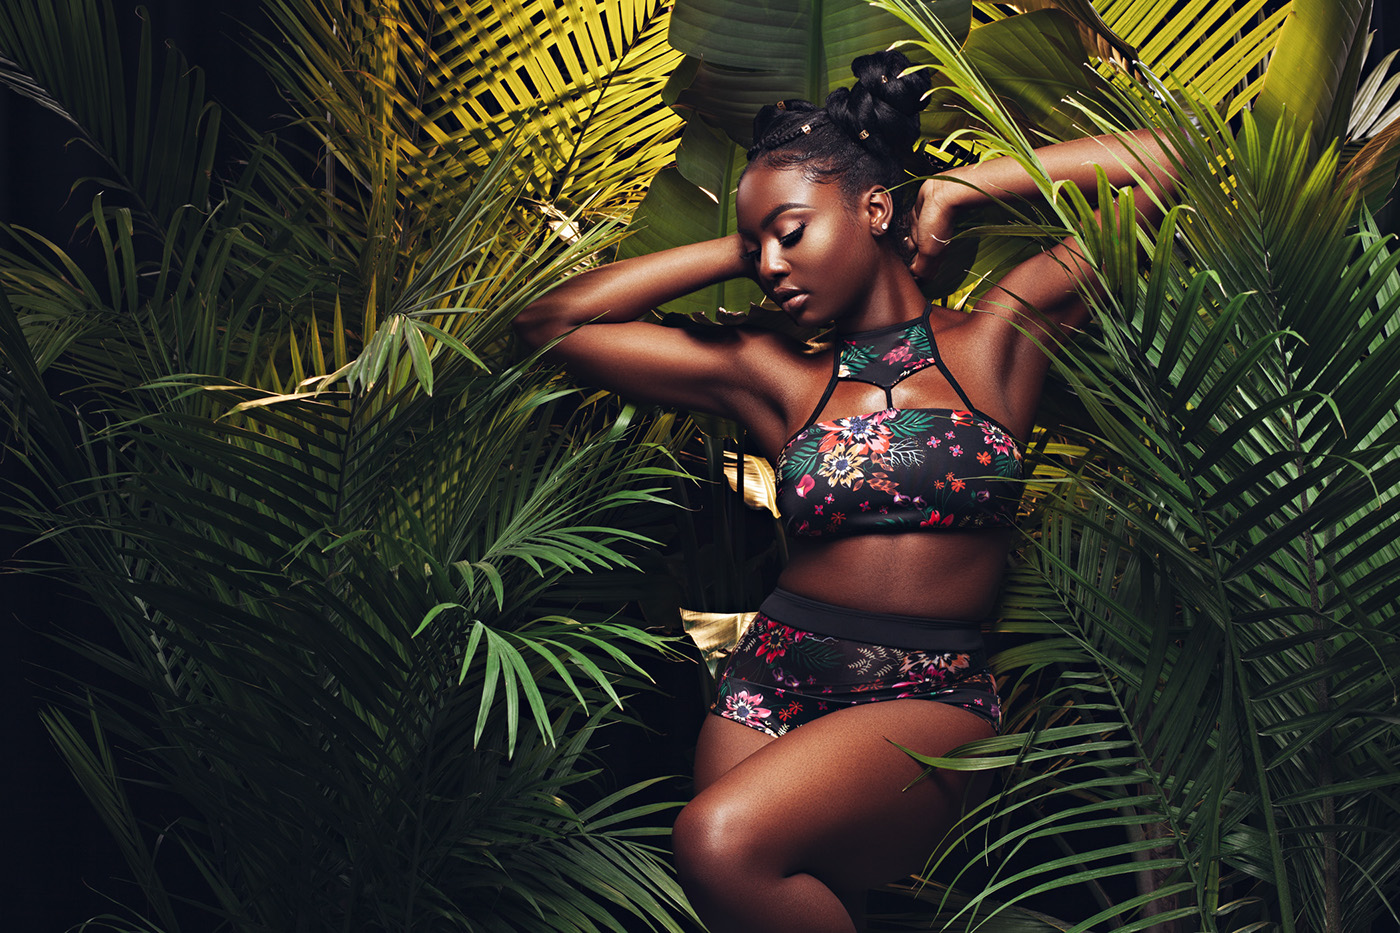 swimsuit swimwear campaign Lookbook commercial Montreal bikini resort Tropical Palm Trees